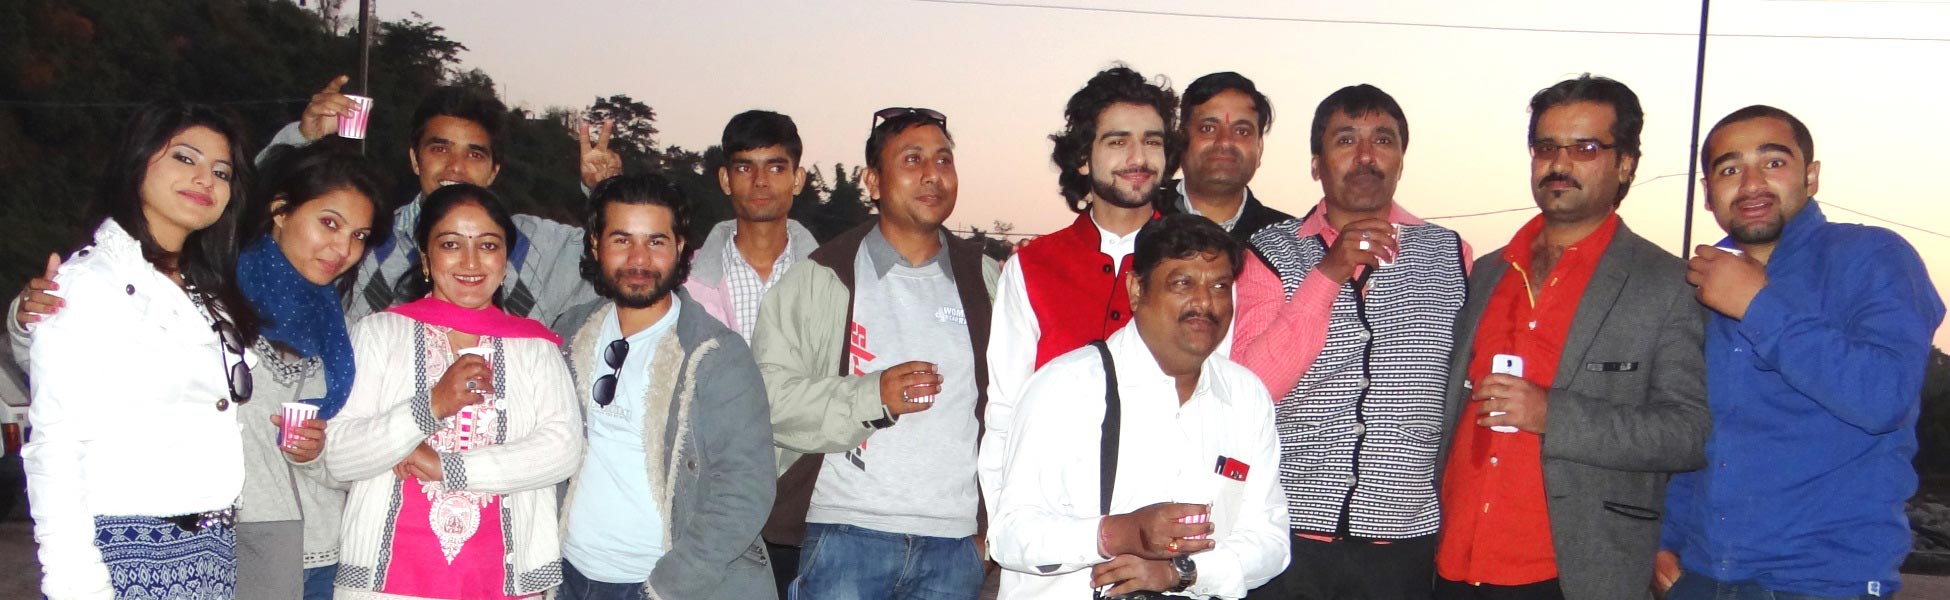 filmmaking workshop in india, filmmaking workshop in haryana, filmmaking workshop in sonipat